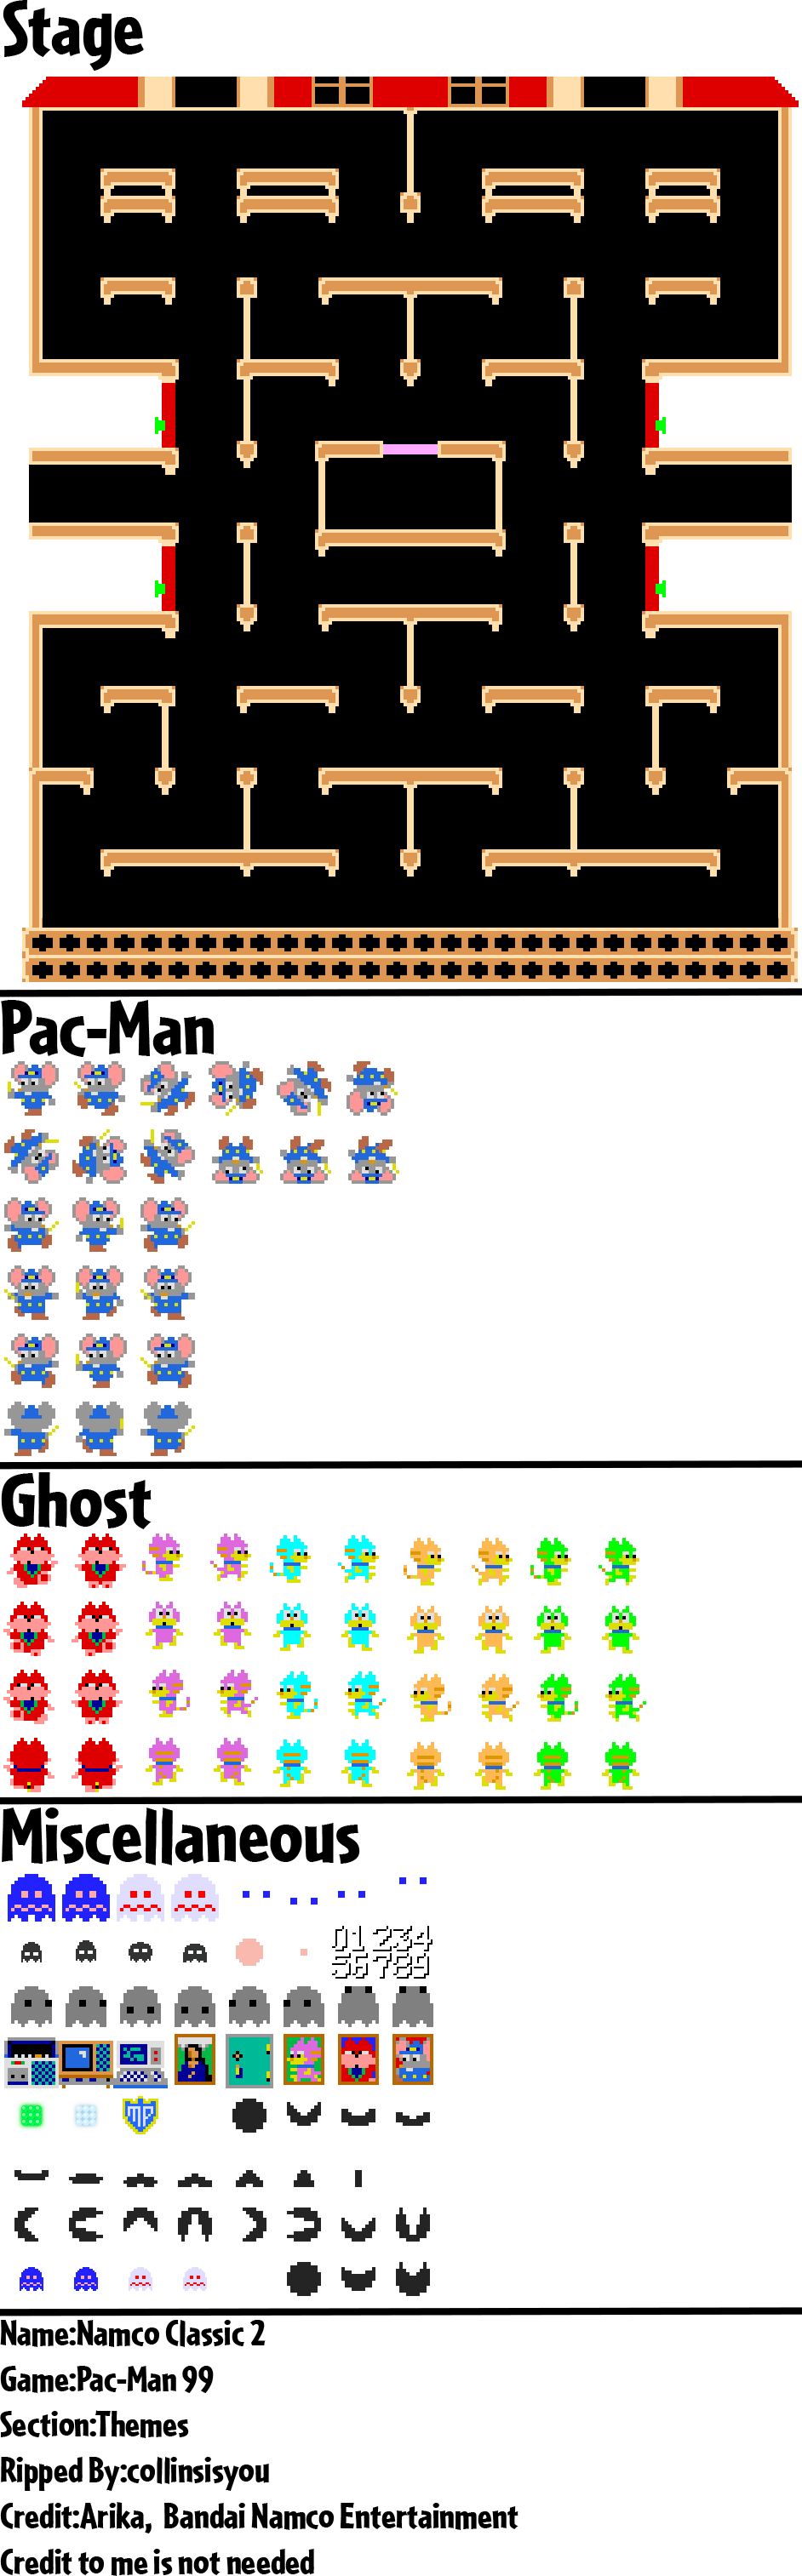 Pac-Man 99 - Mappy